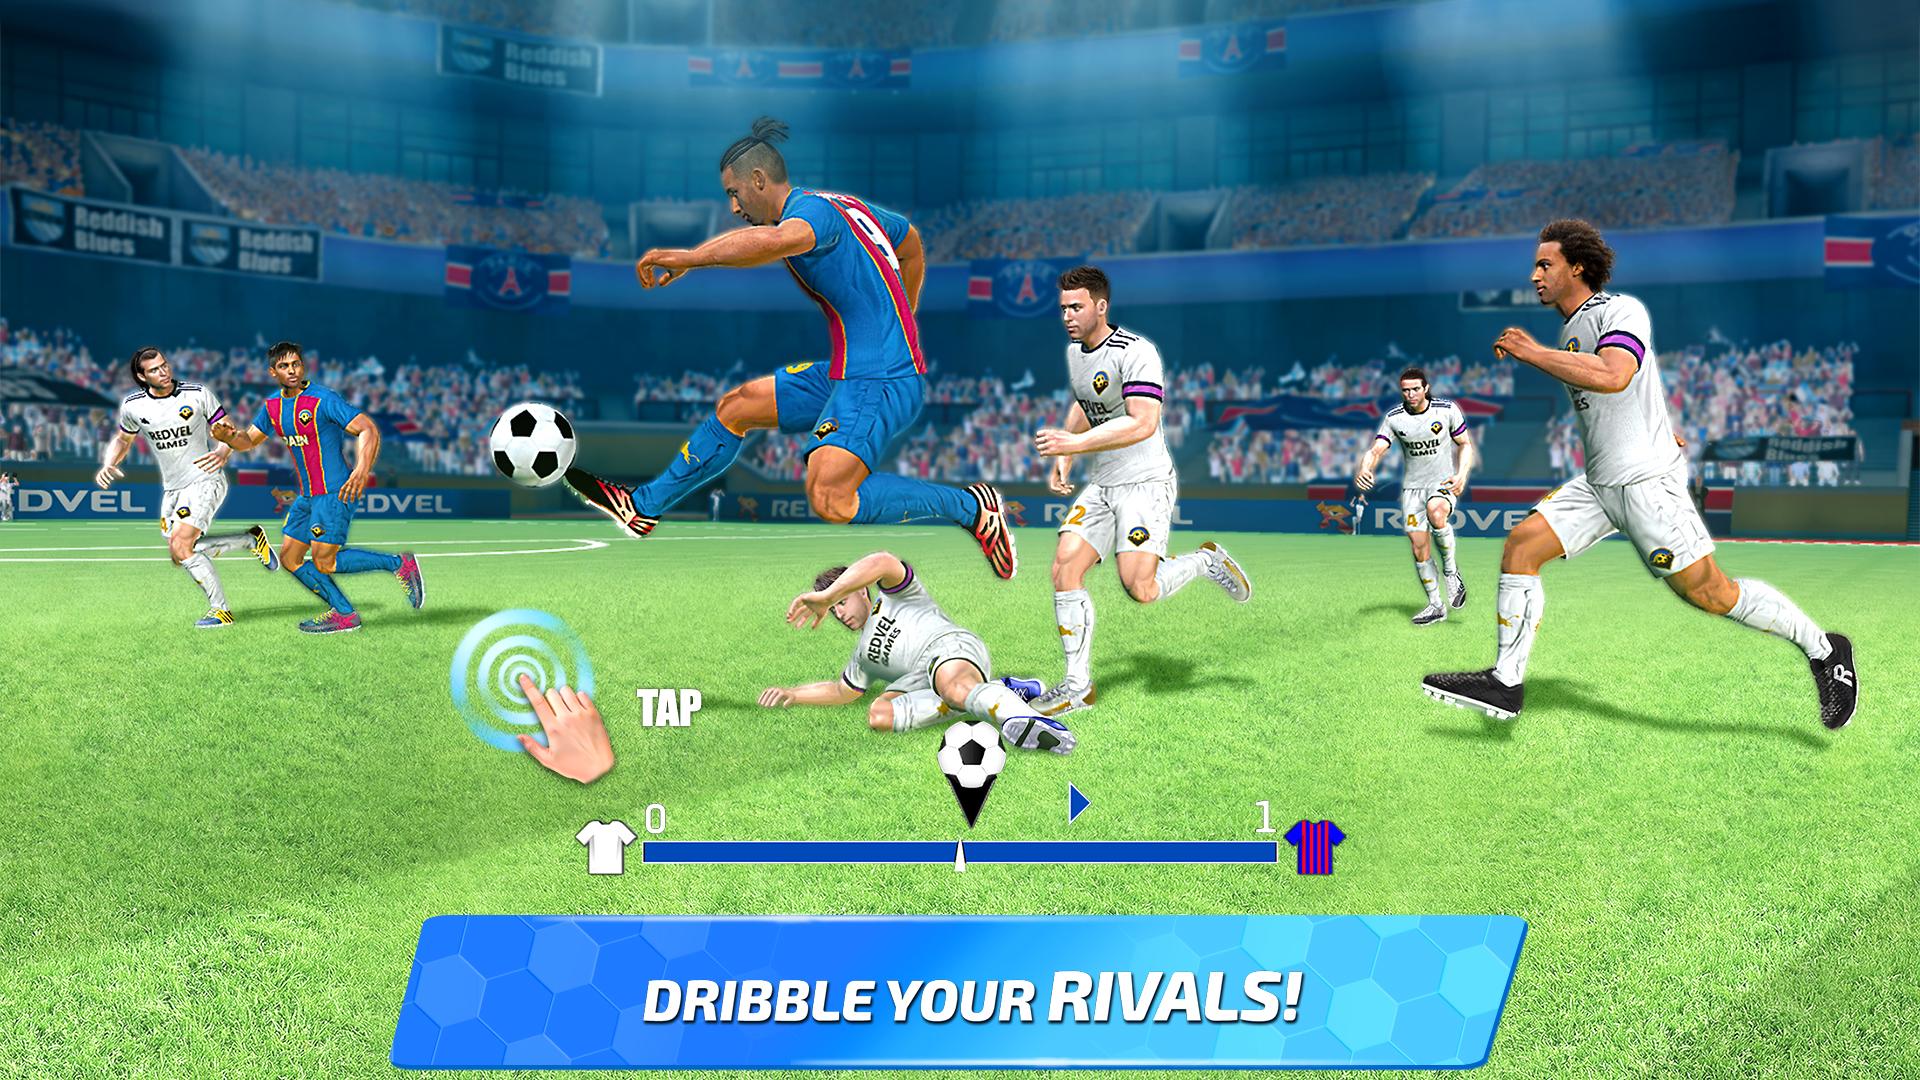 Soccer Star 2020 Football Cards: The soccer game 0.19.0 Screenshot 2